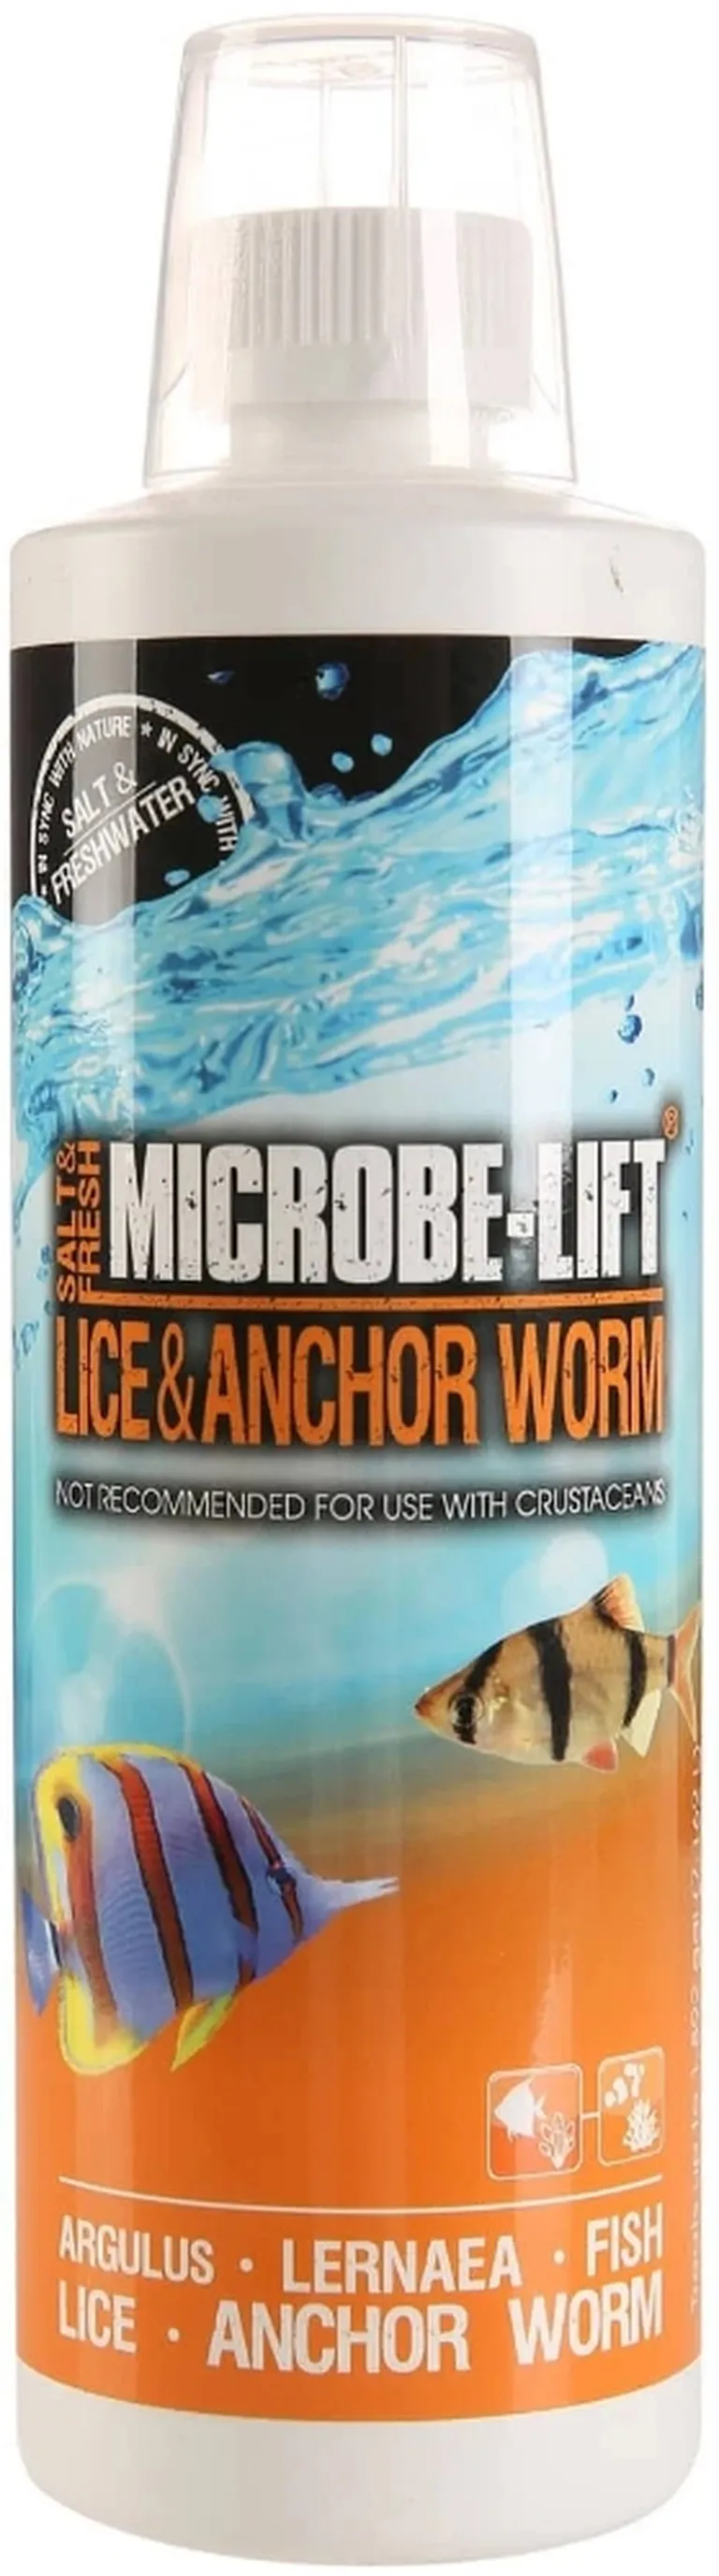 Microbe-Lift Lice & Anchor Worm Photo 1